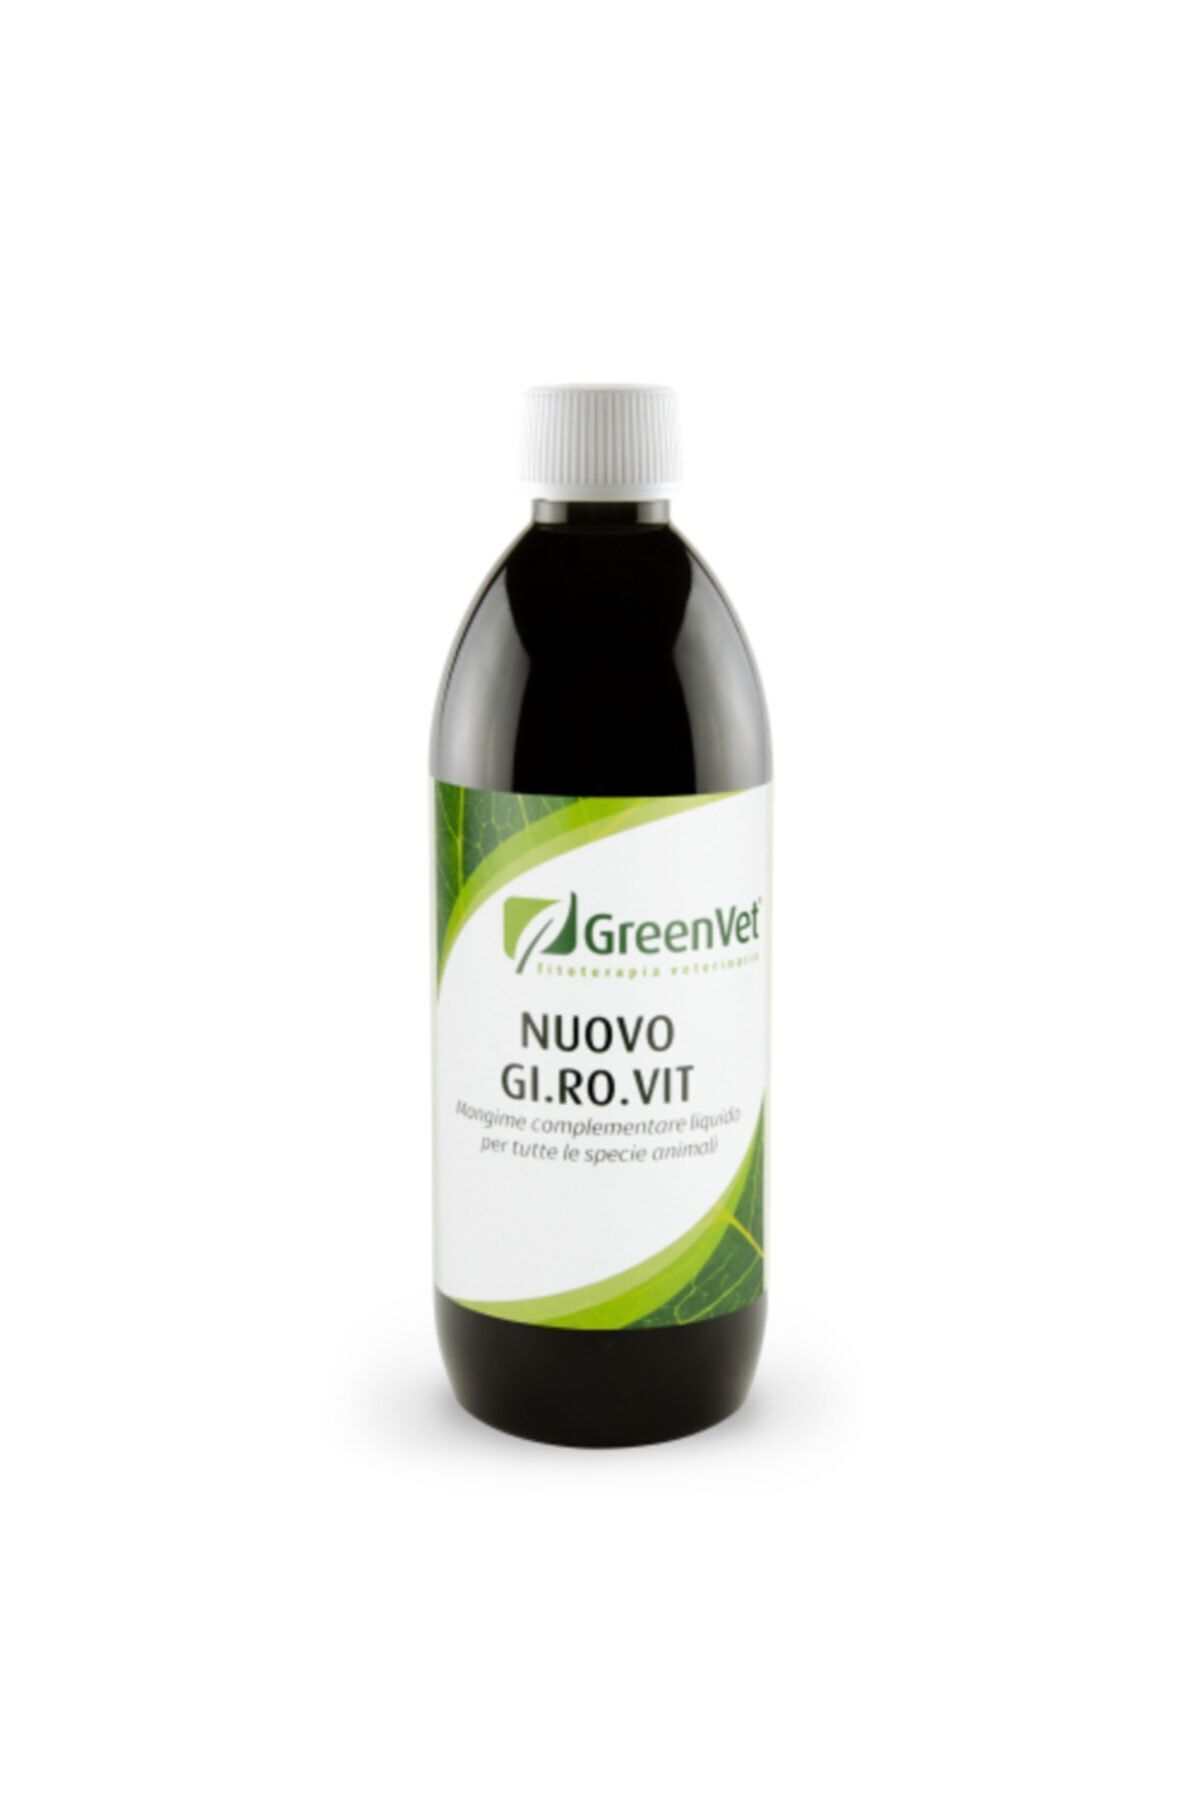 Greenvet Nuovo Girovit 500 Ml